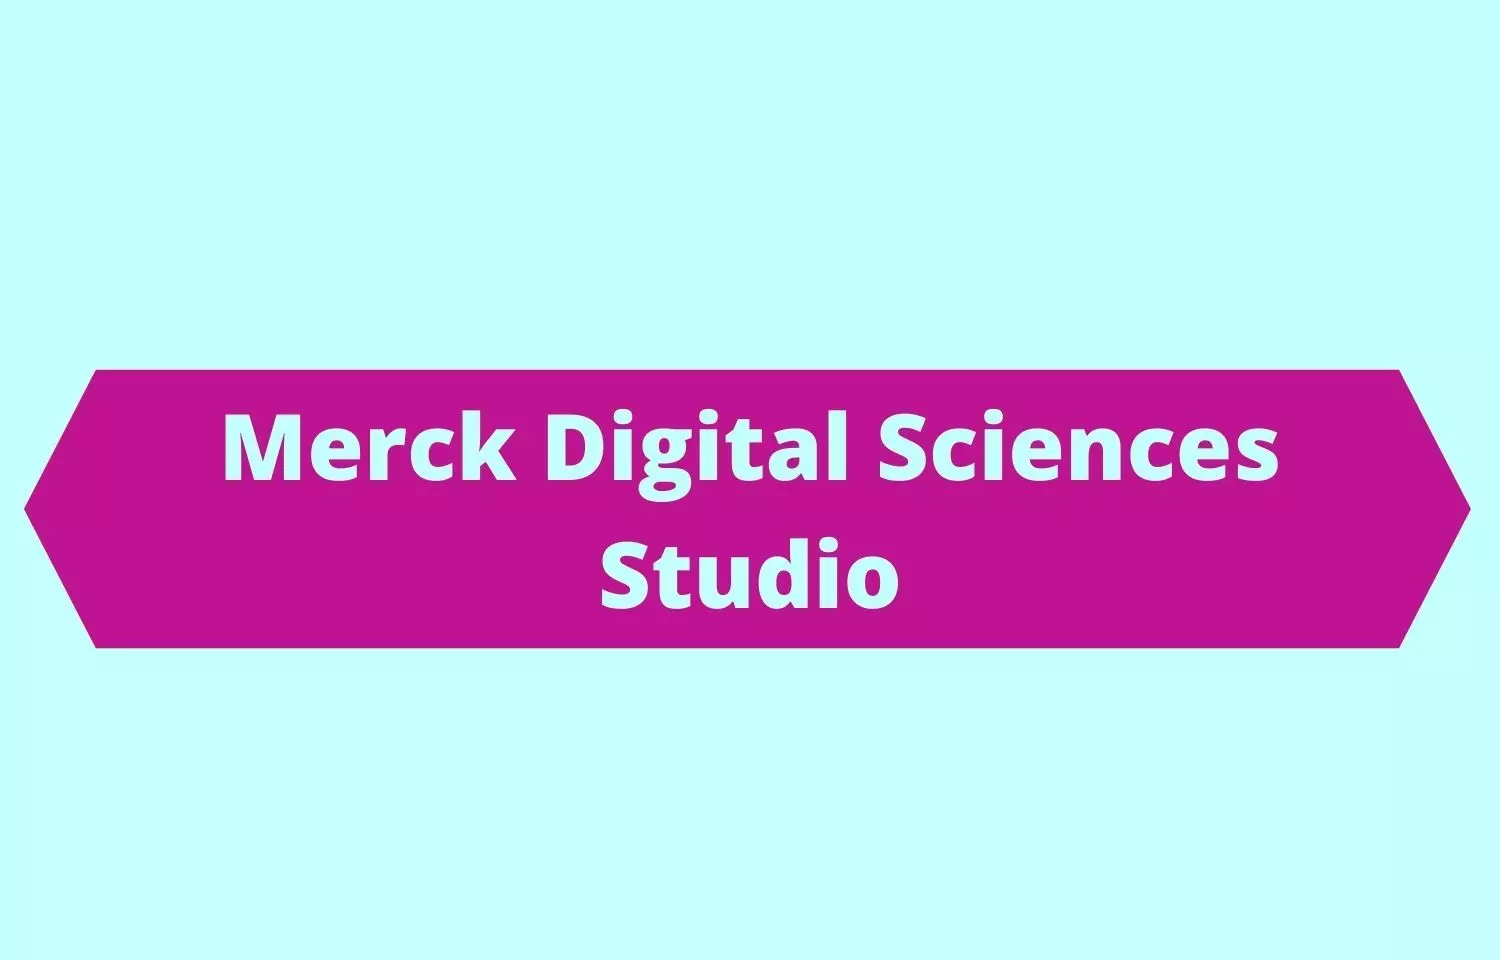 Merck launches Merck Digital Sciences Studio for healthcare startups